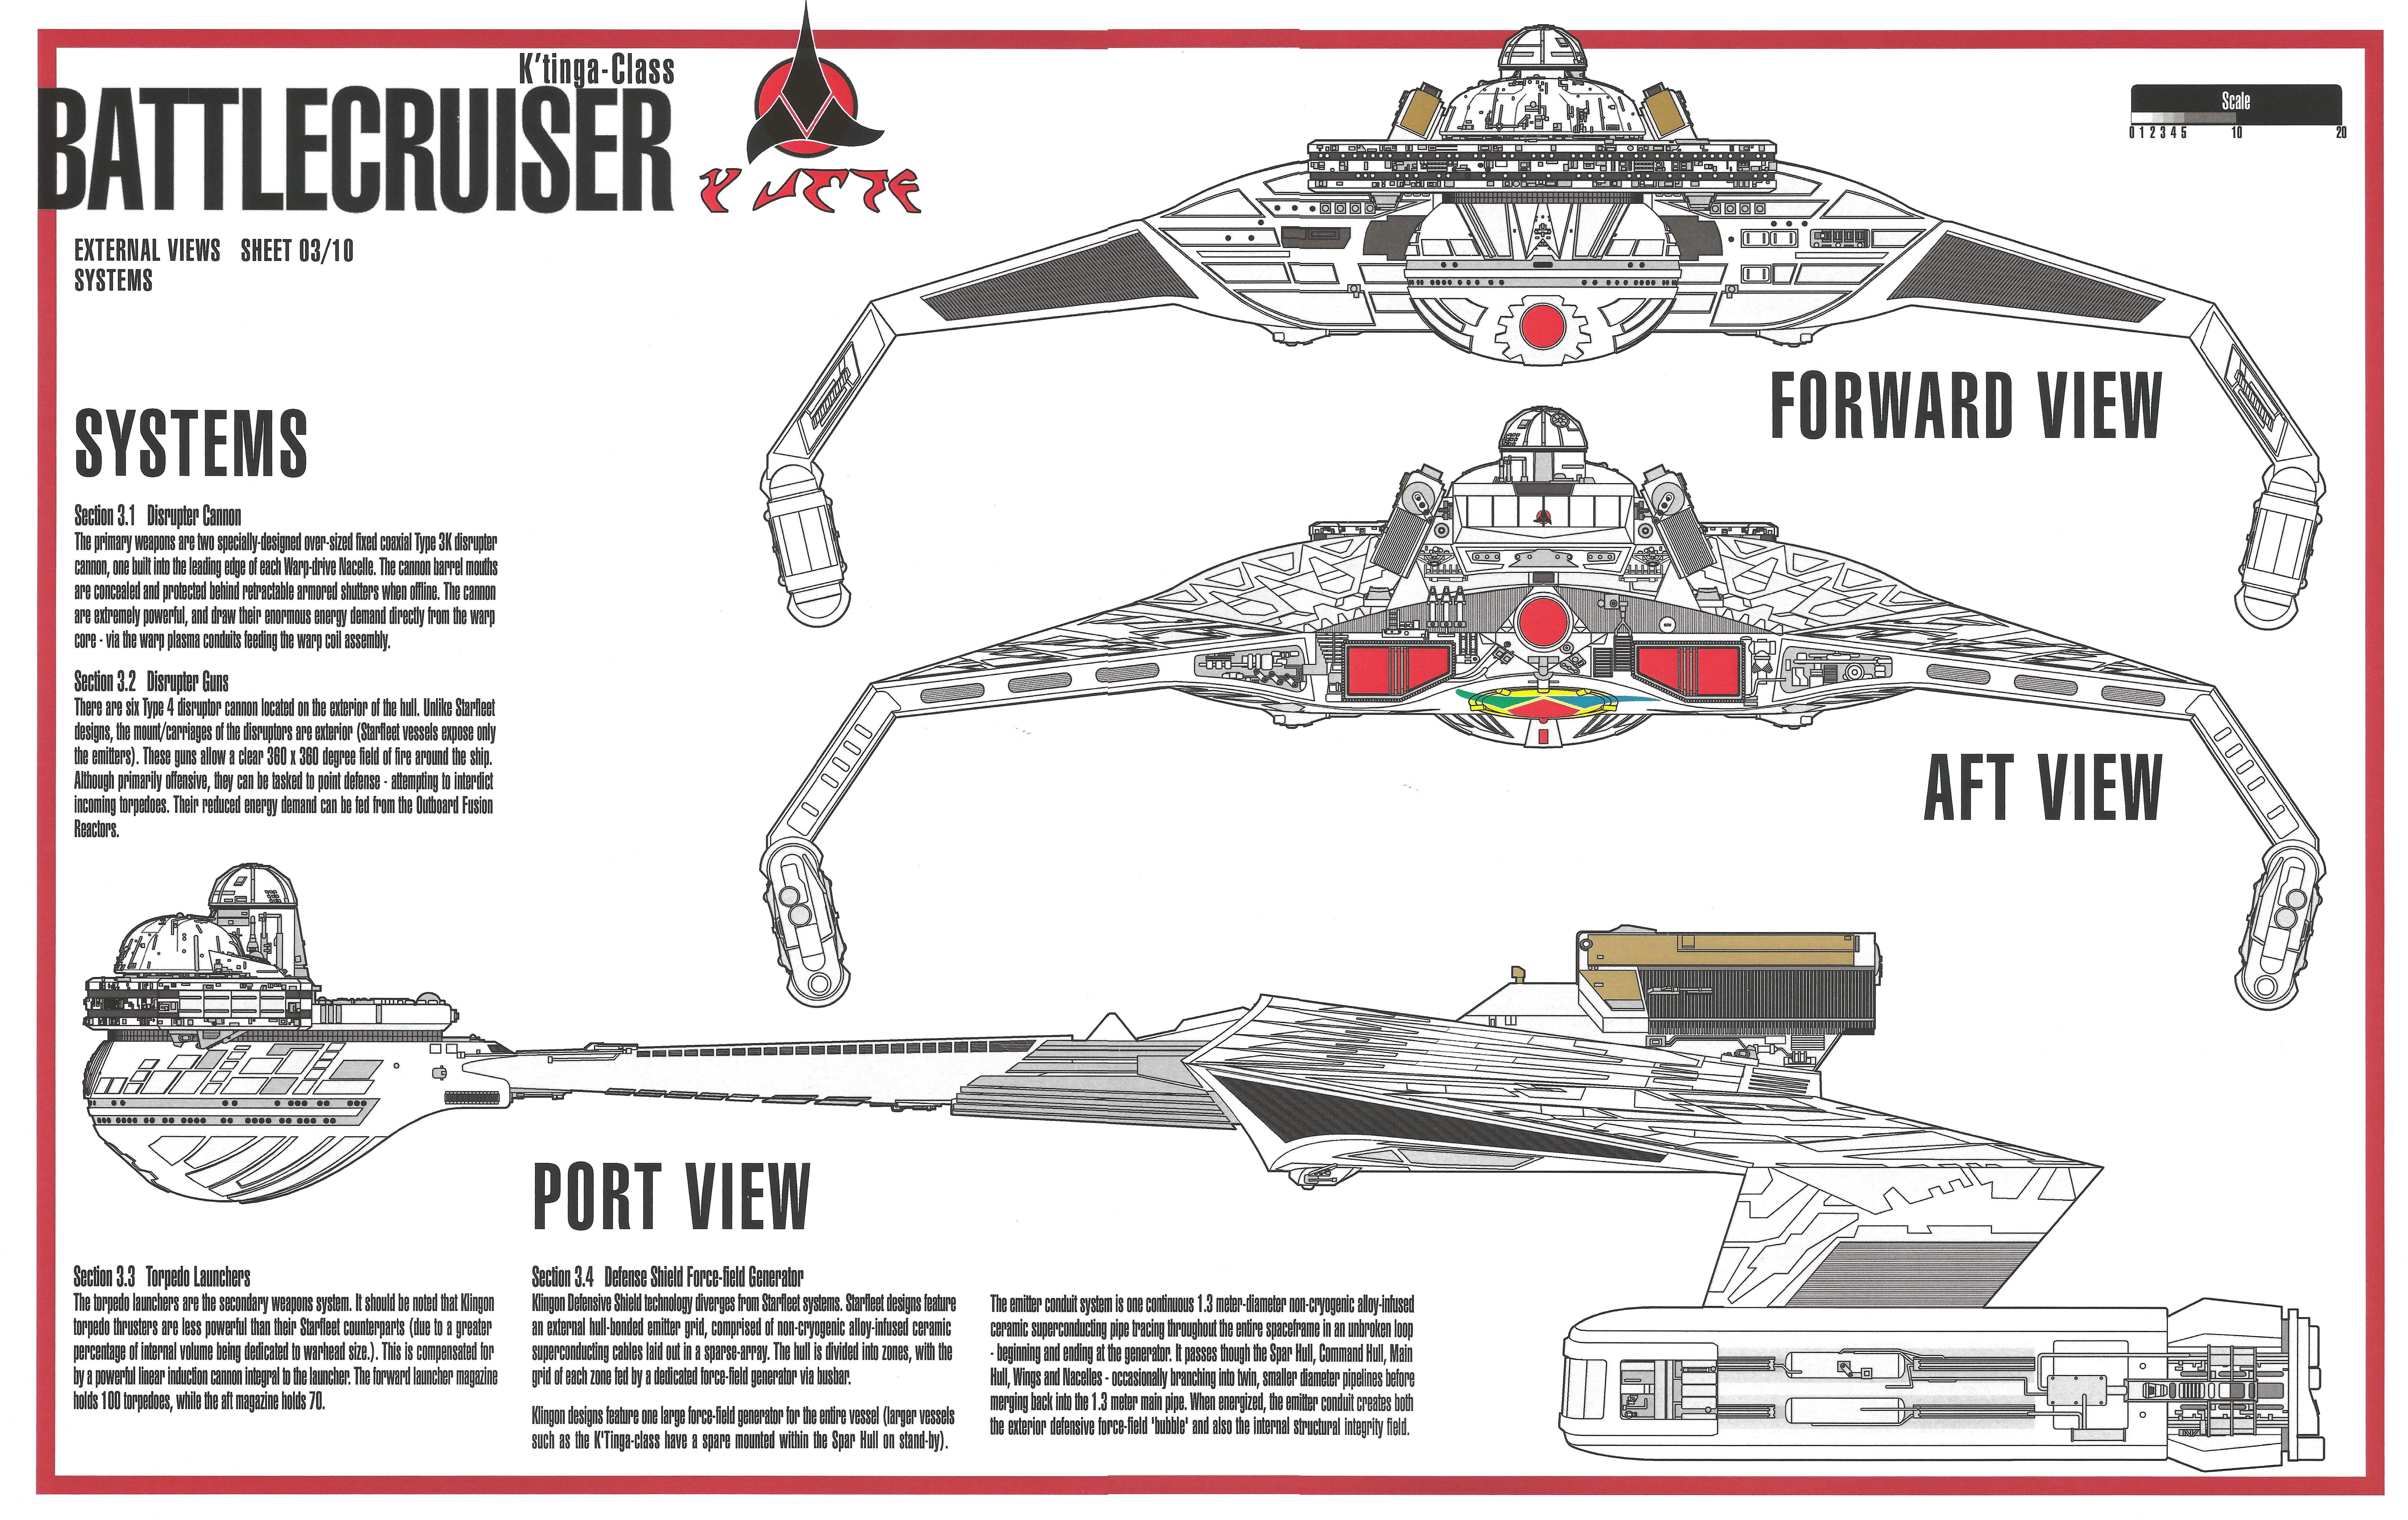 Handy-Wallpaper Star Trek, Science Fiction kostenlos herunterladen.